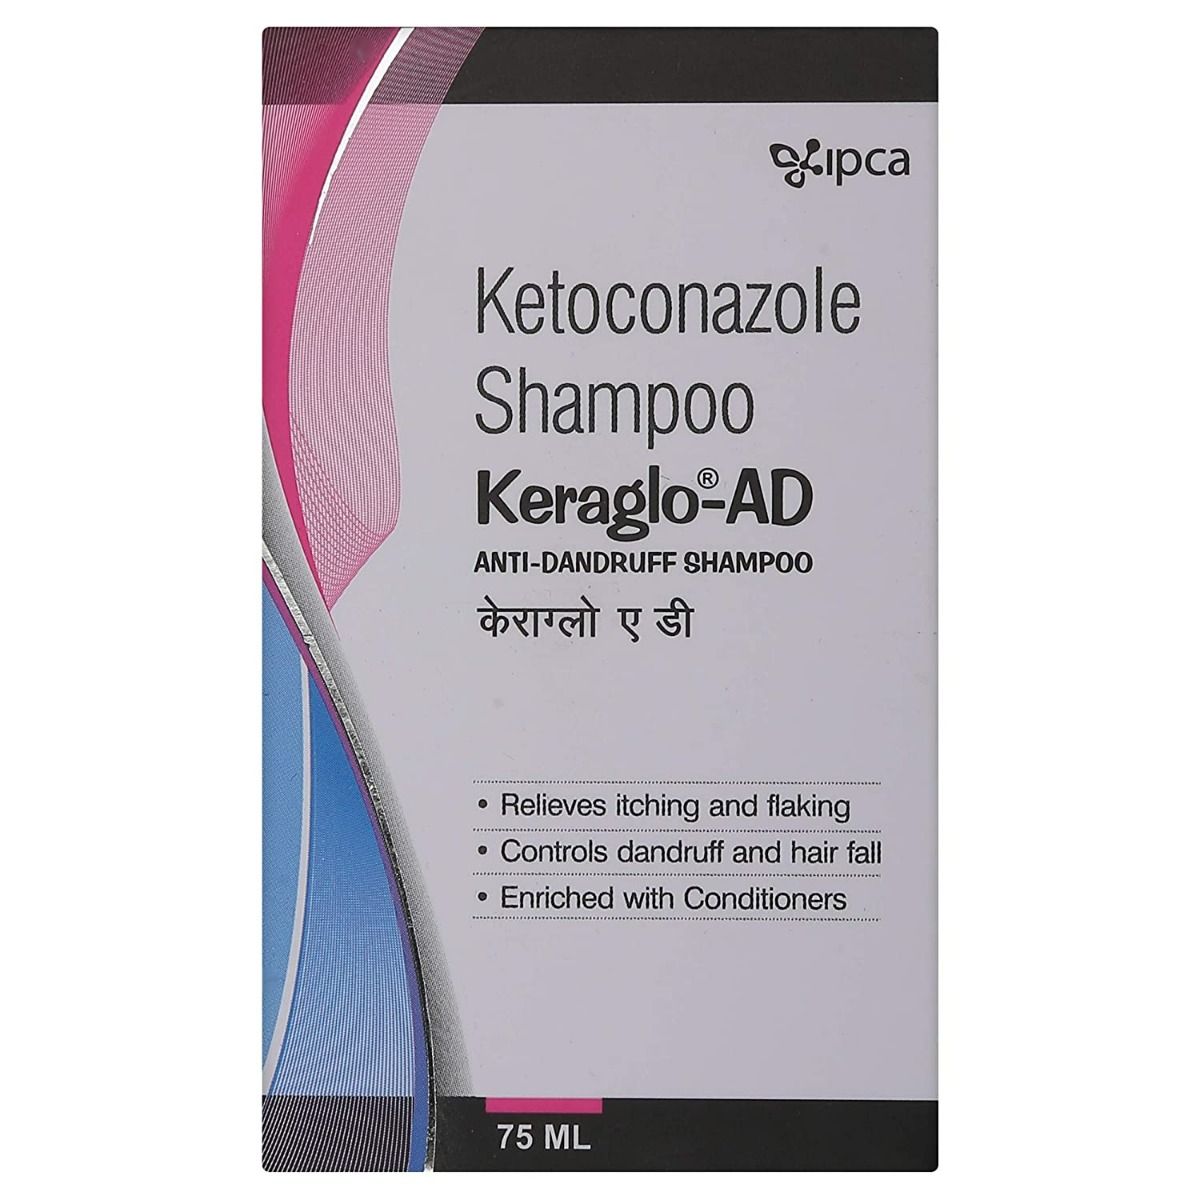 Keraglo-AD Anti-Dandruff Shampoo, 75 ml, Pack of 1 